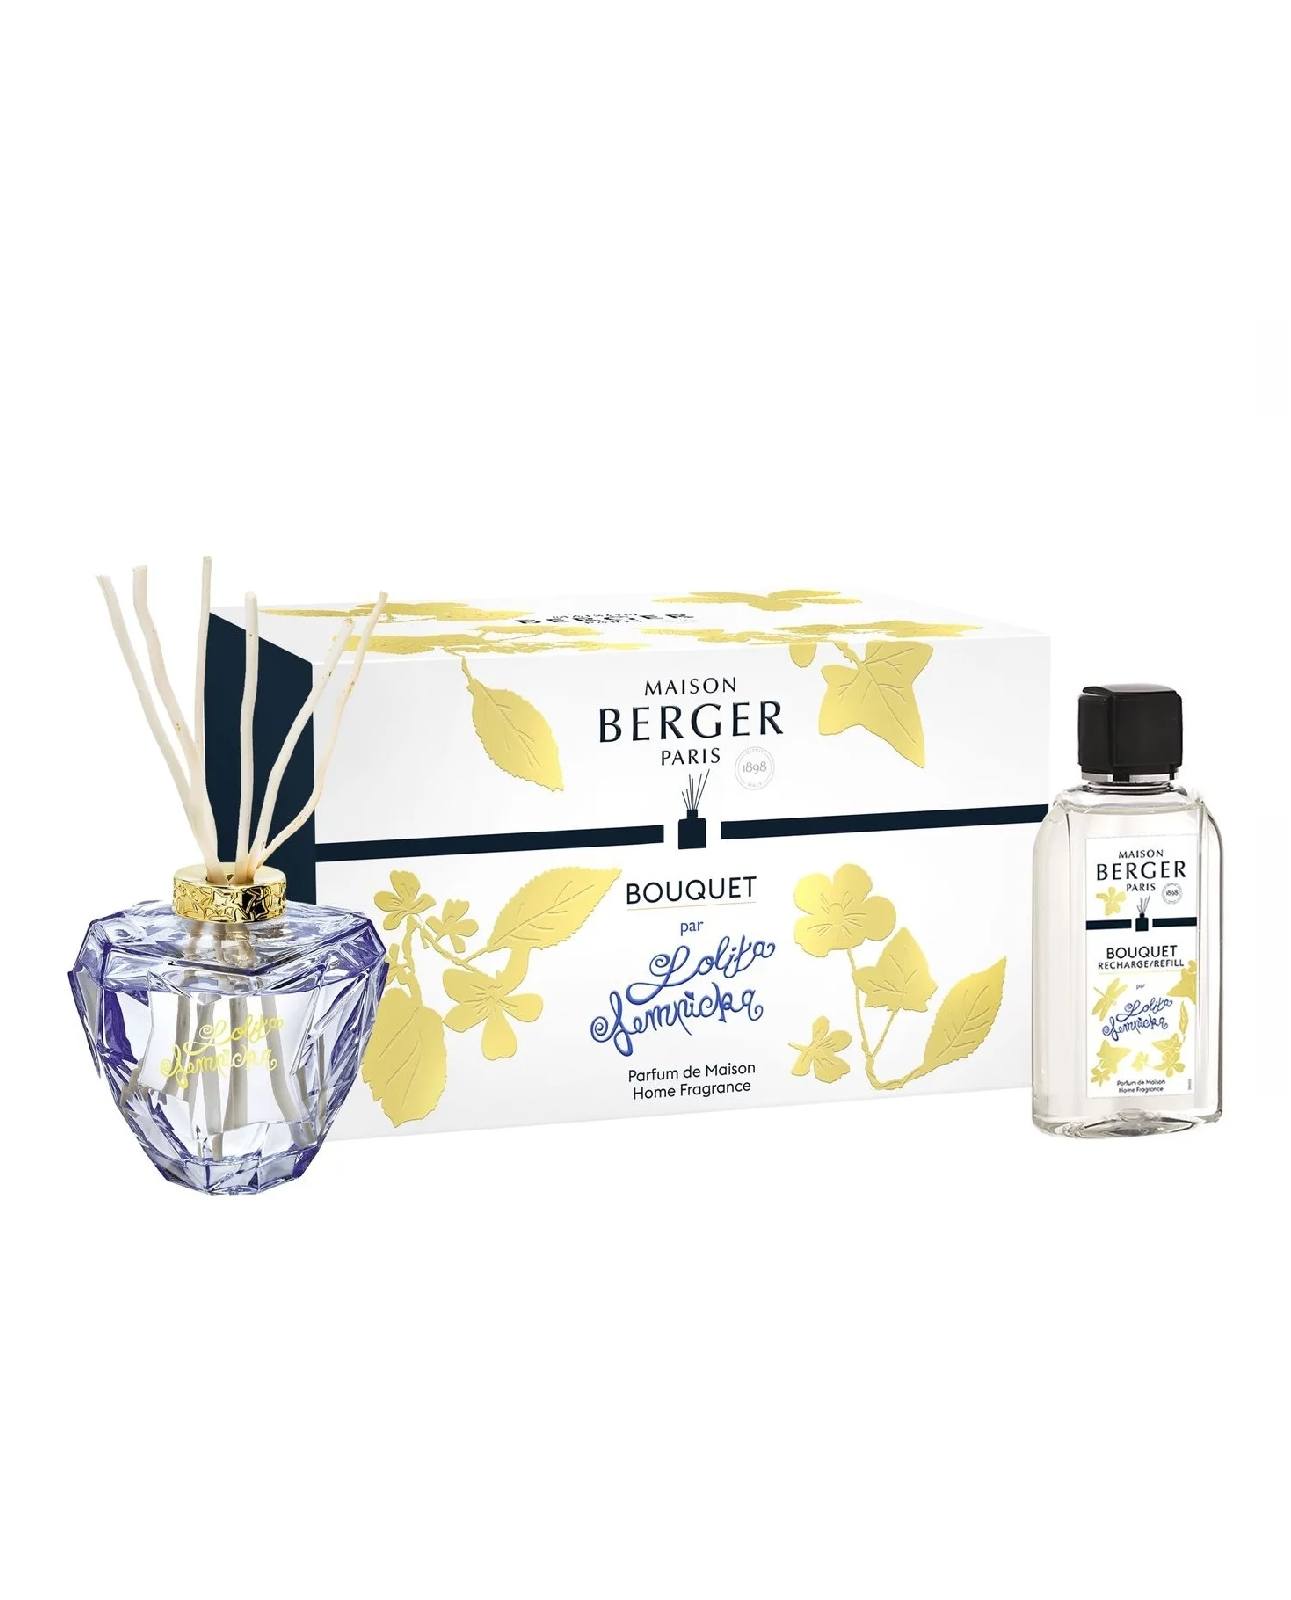 MAISON BERGER PARIS - Lolita Lempicka - Refill For Bouquet Home Fragrance  400 Ml